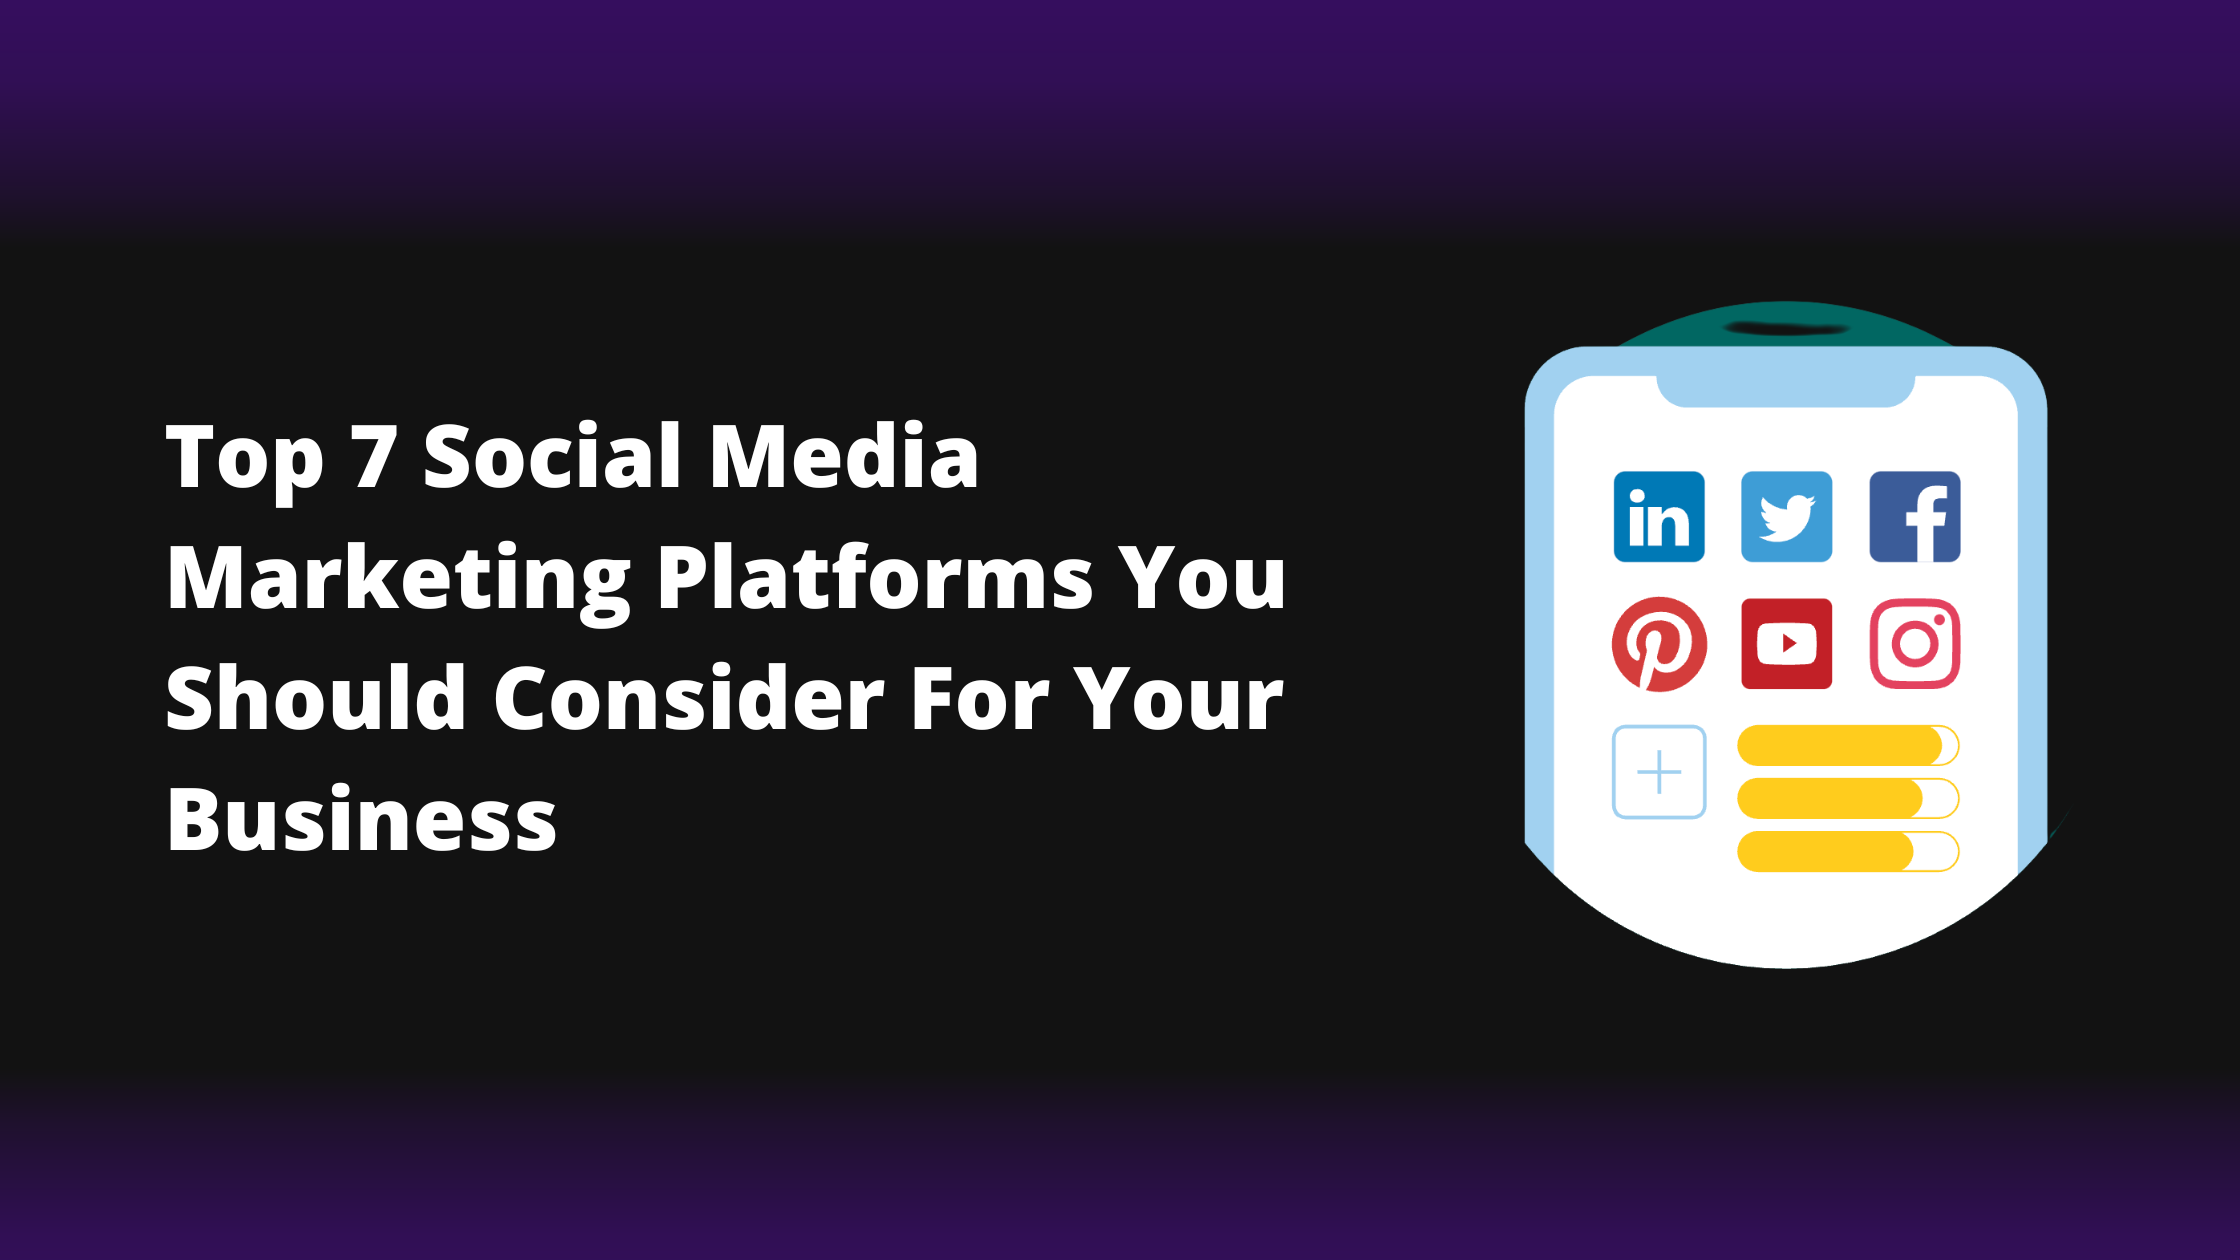 Top 7 social media marketing platforms you should consider for your business